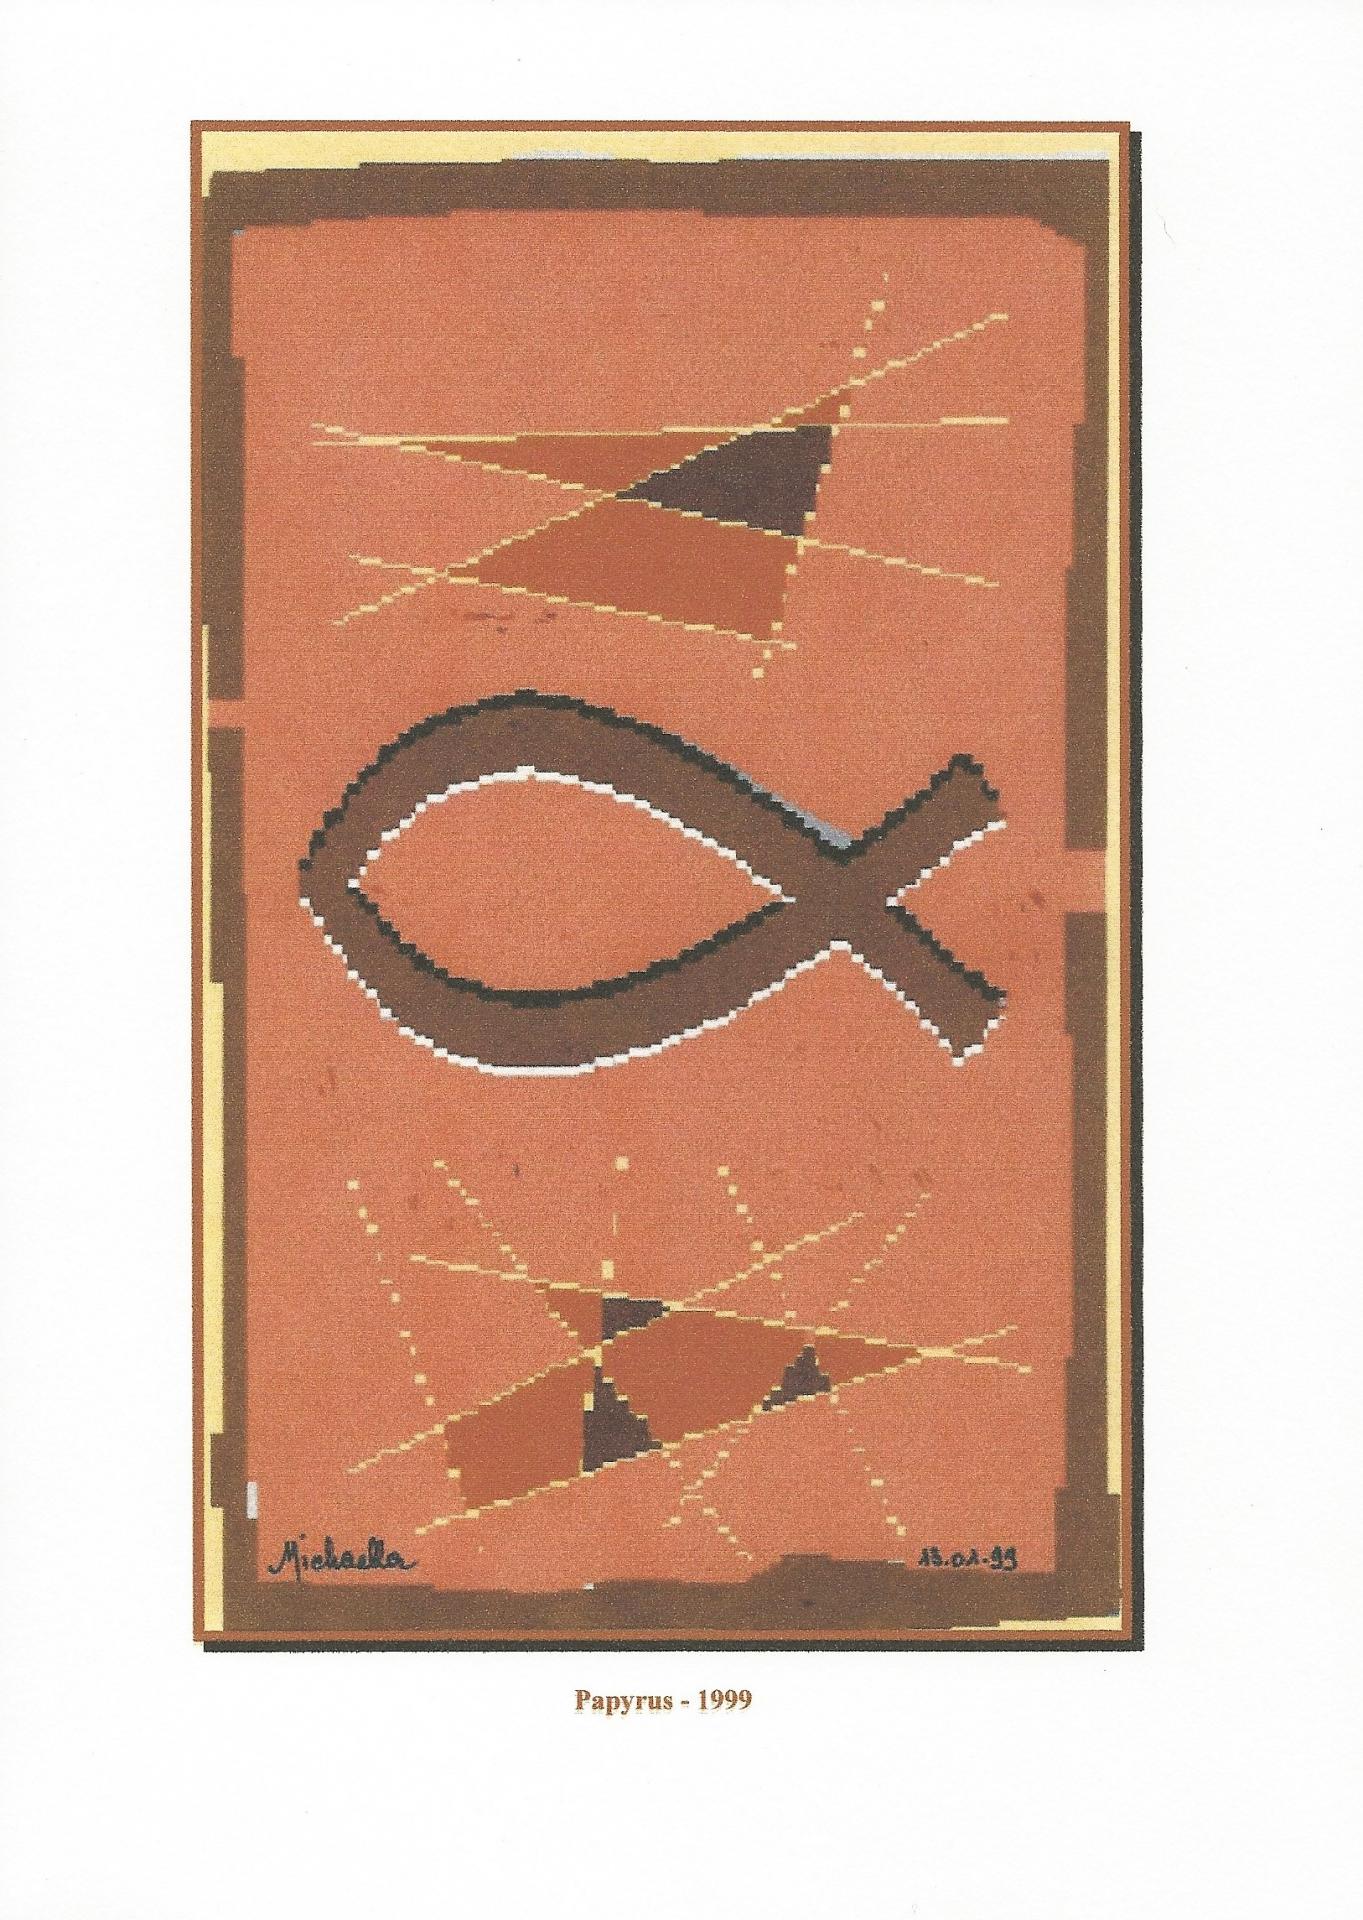 6 1999 papyrus